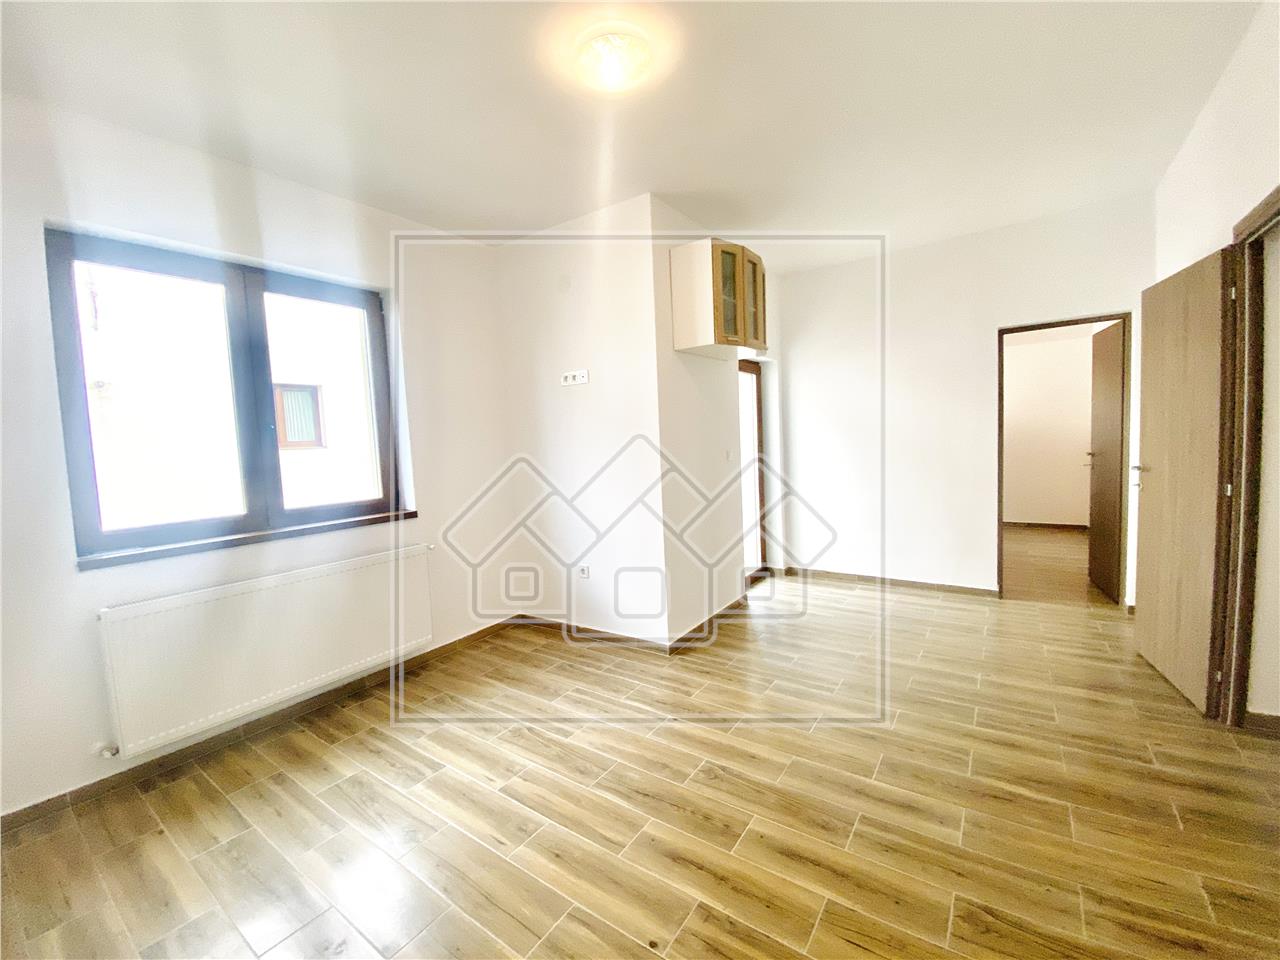 Apartament 3 rooms for rent in Sibiu -  Tilisca area